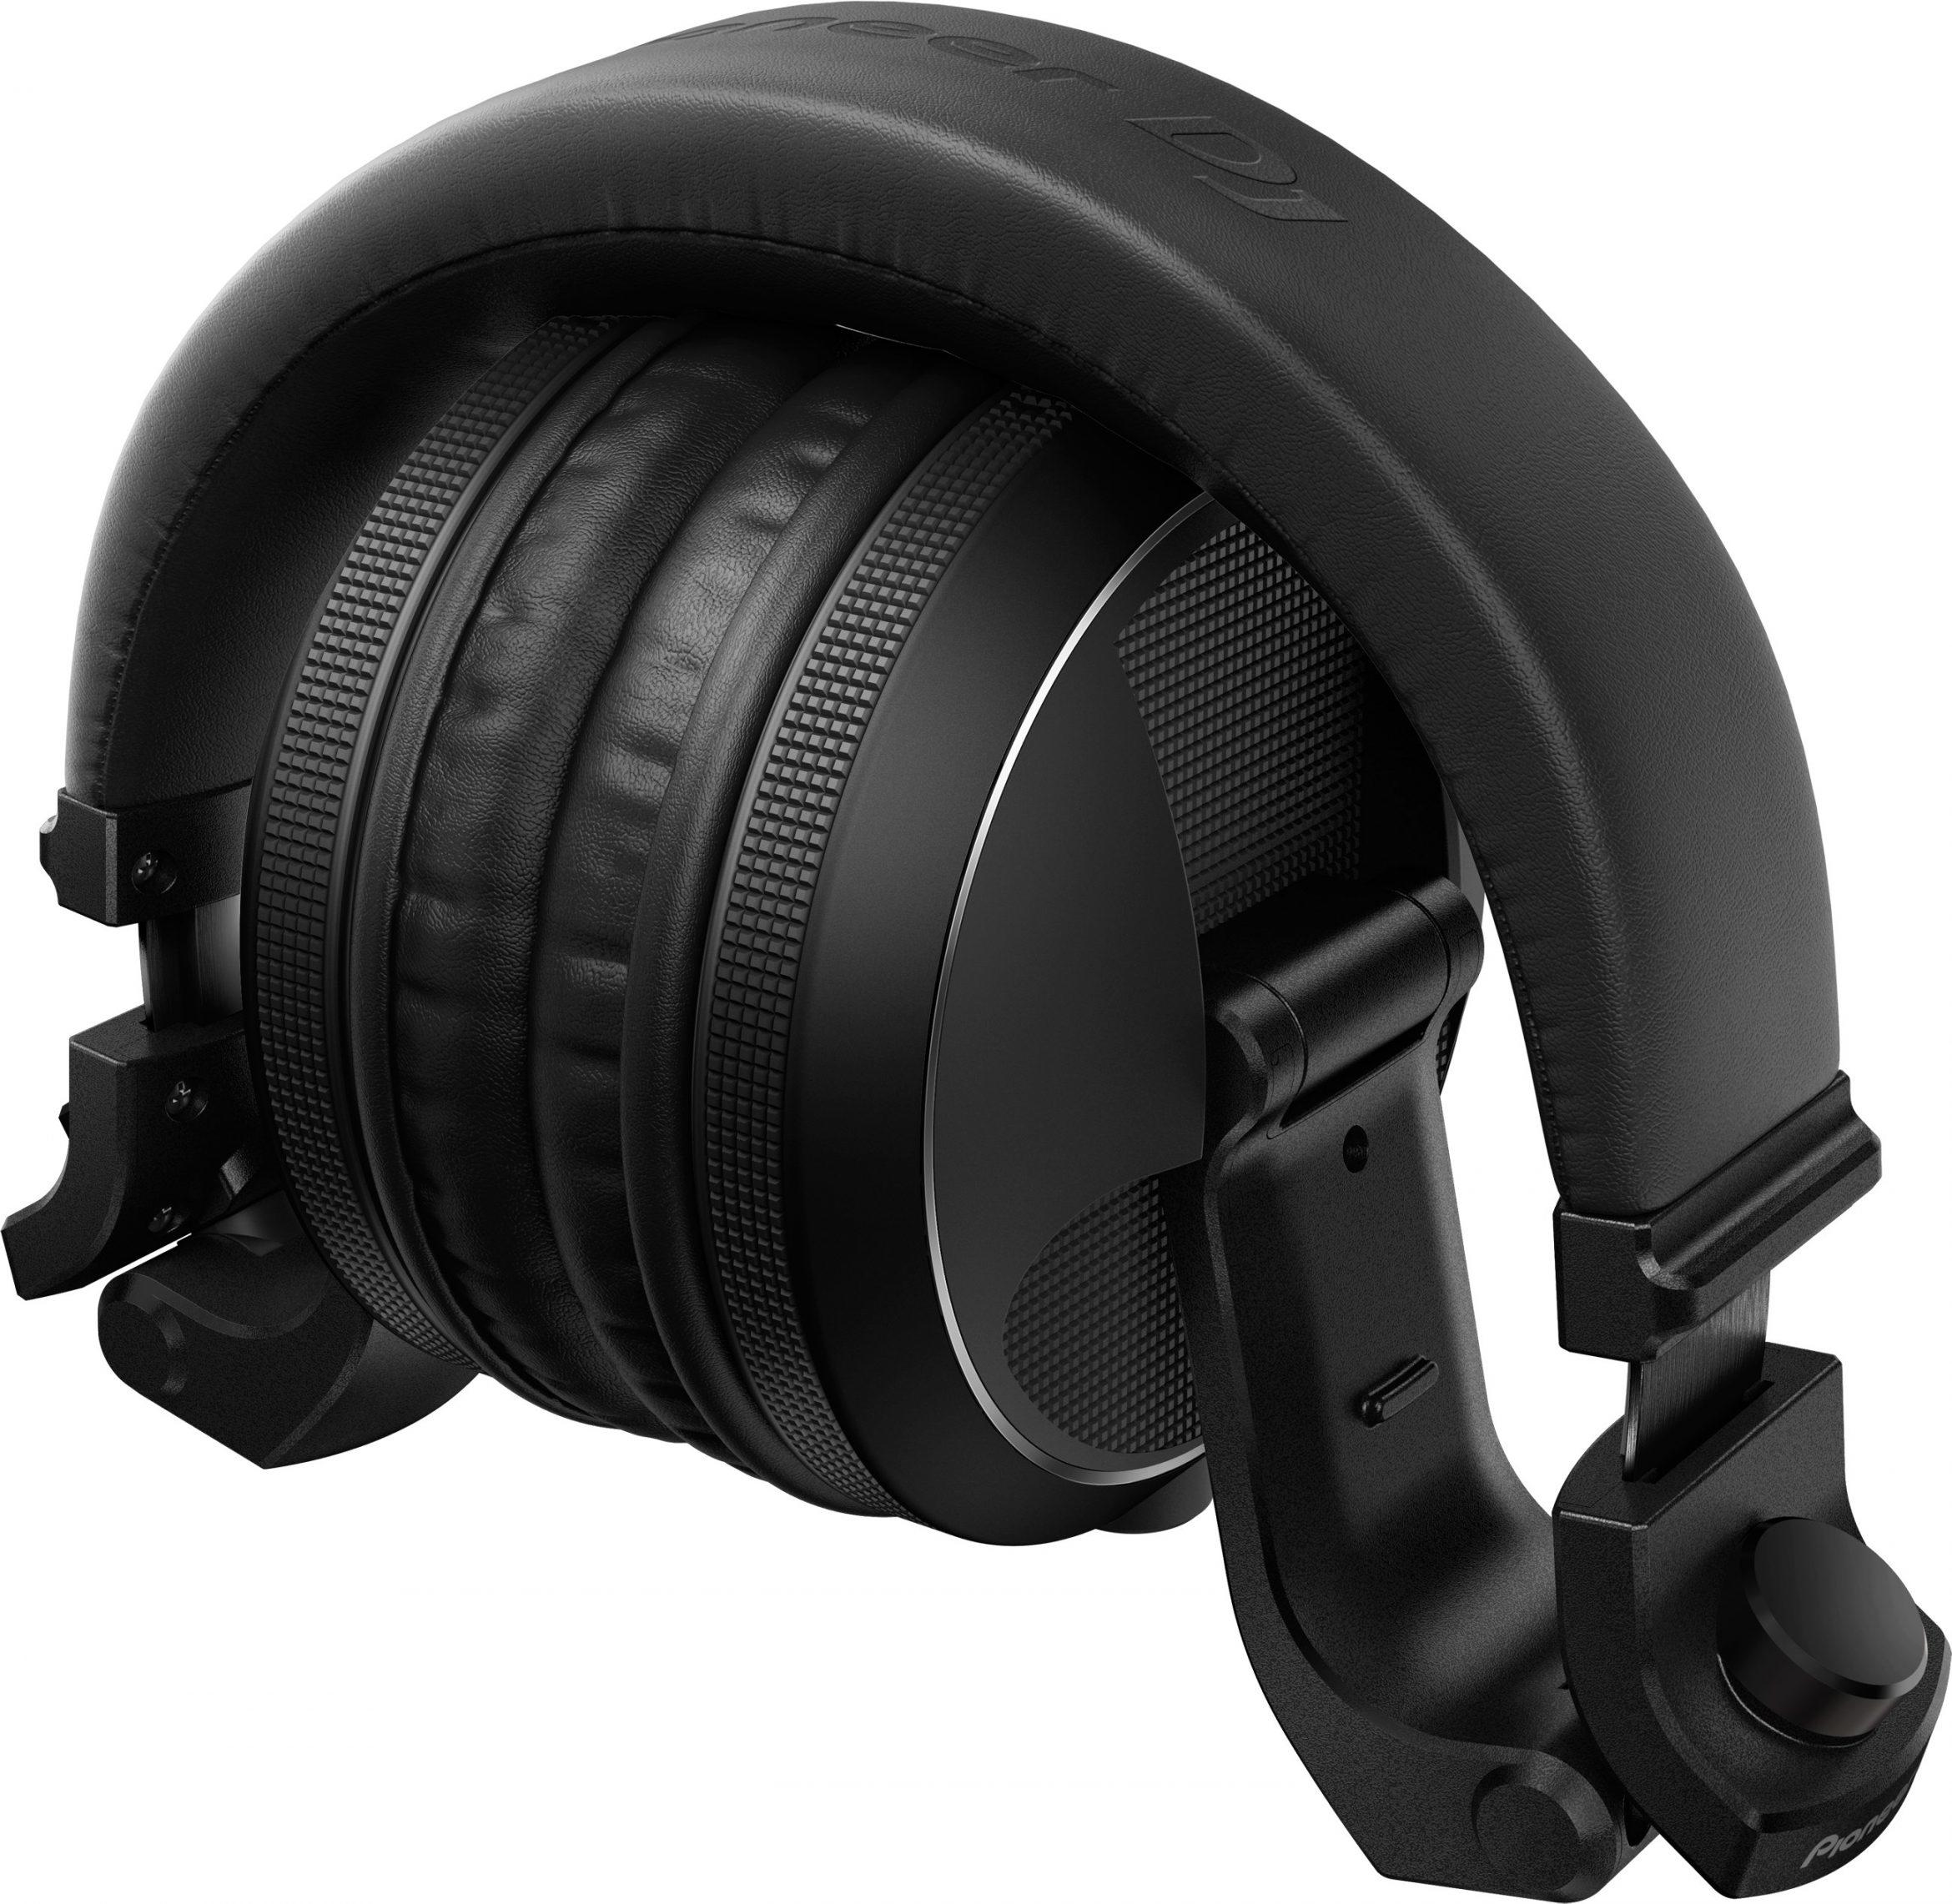 Pioneer HDJ-X5 Professional DJ Headphones folded